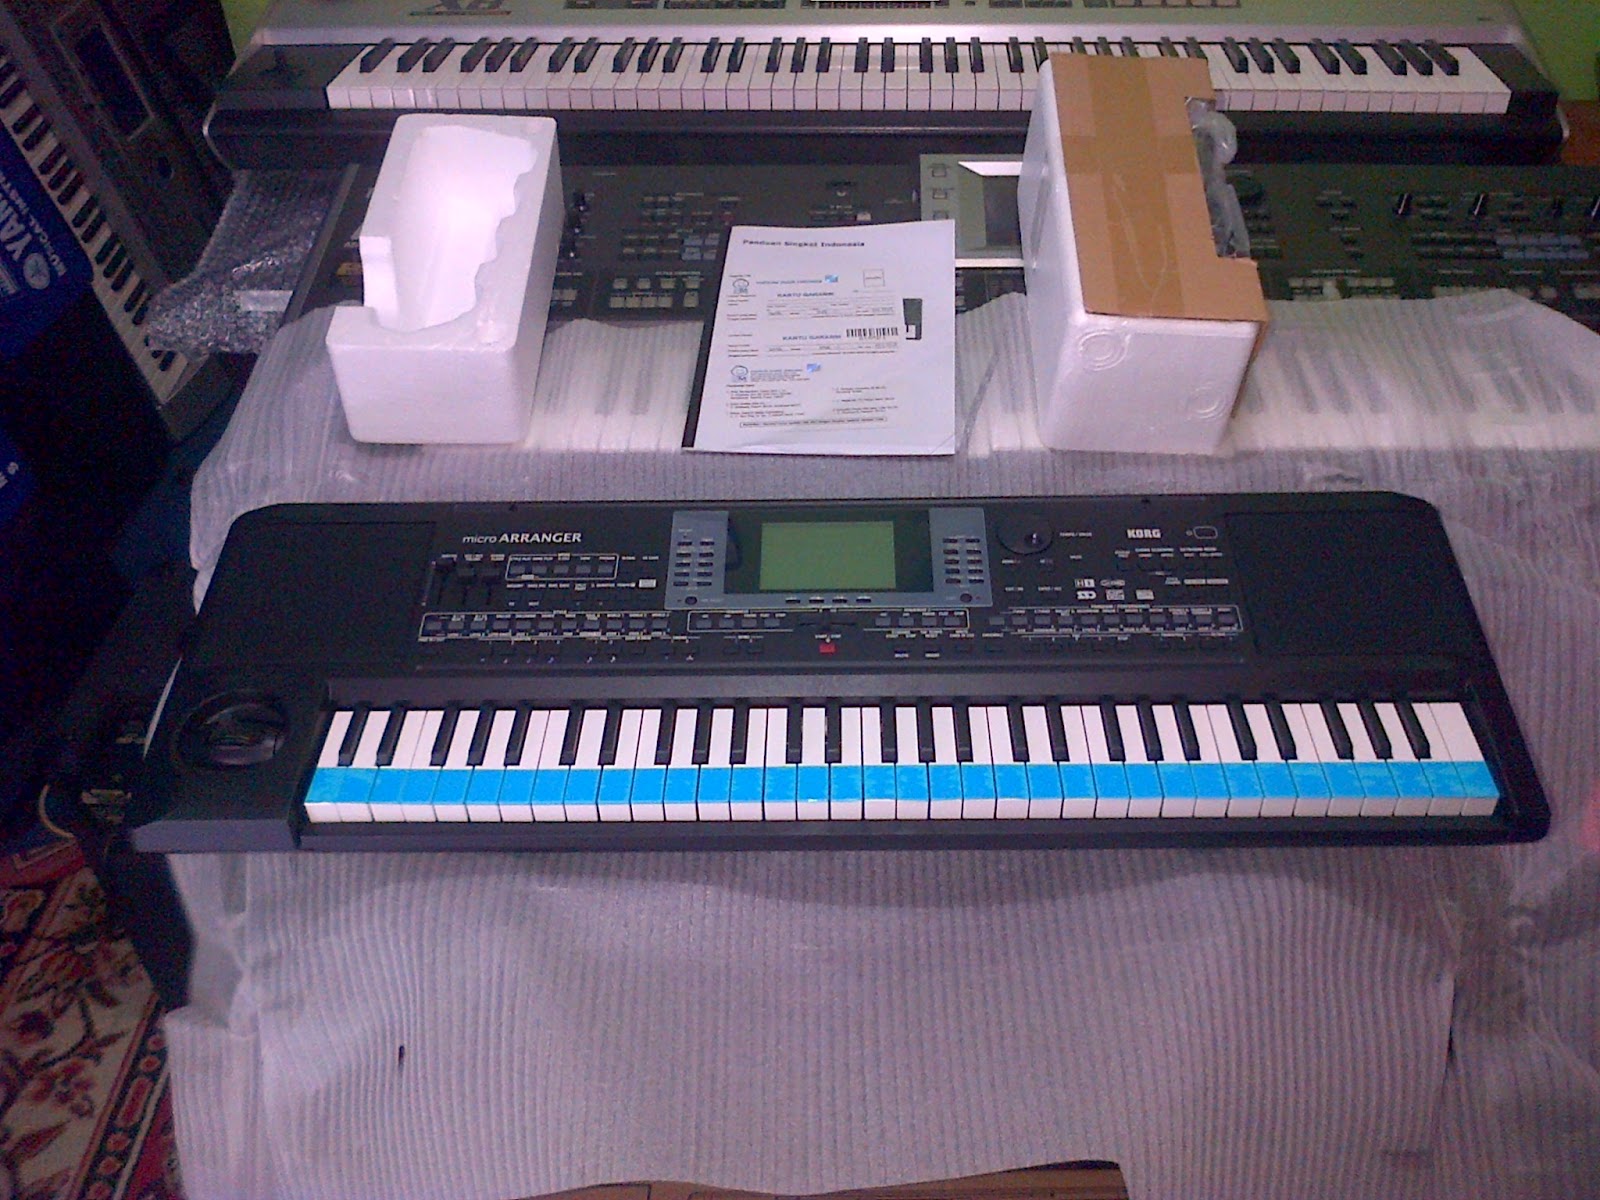 www.trijayamusik.com: New keyboard KORG MicroArranger